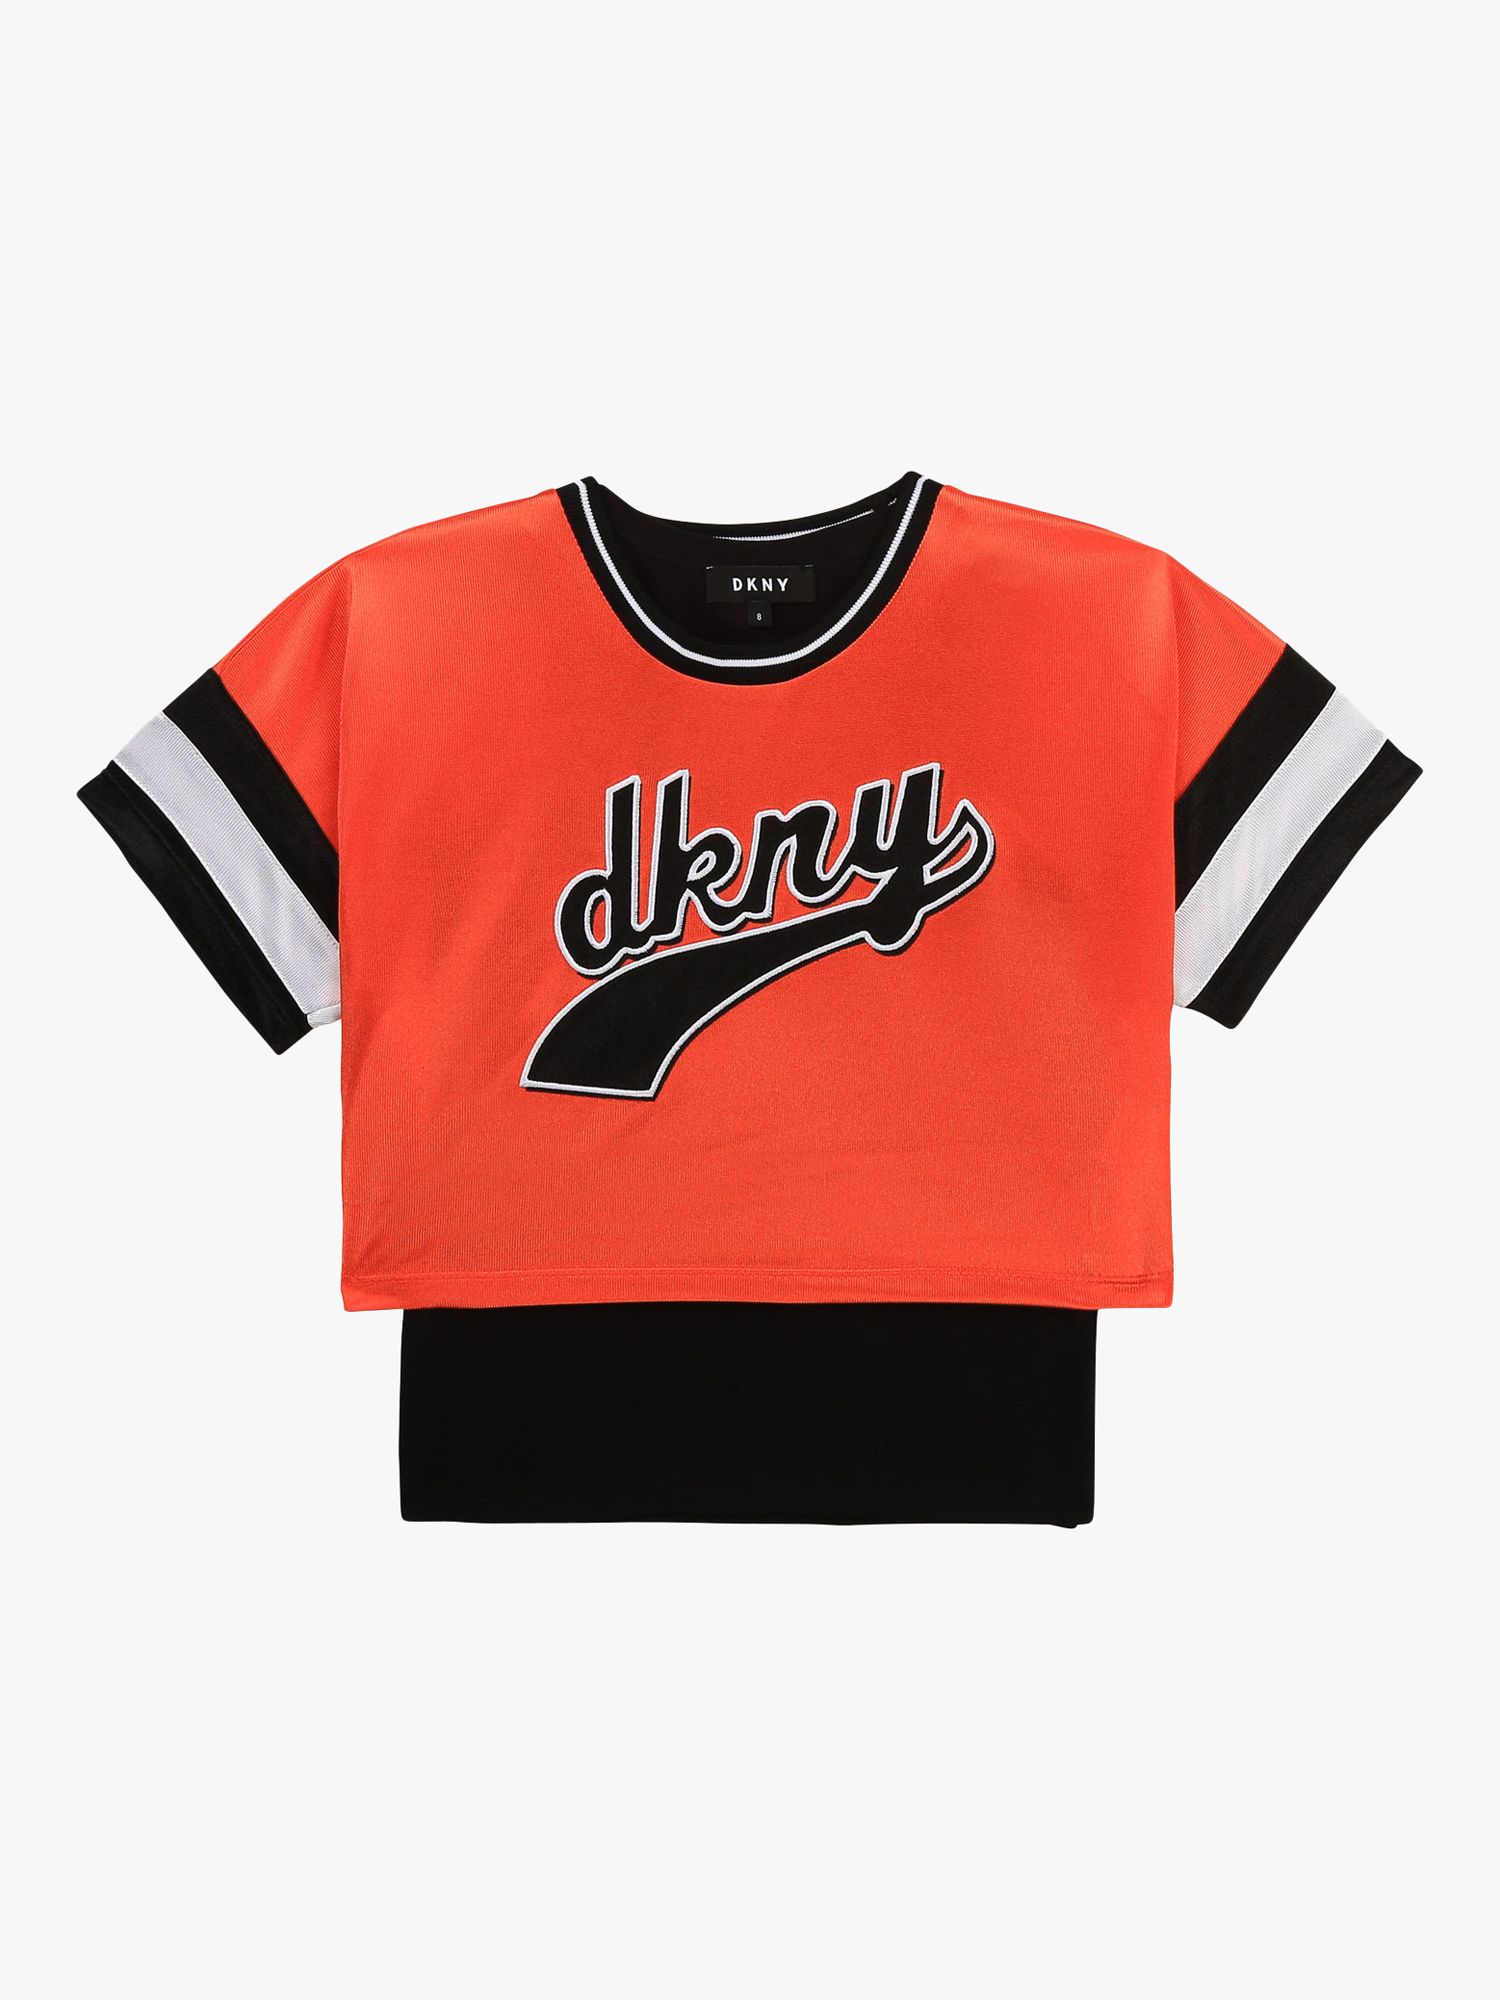 DKNY Kids' Vest & Jersey Top, Poppy, 4 years